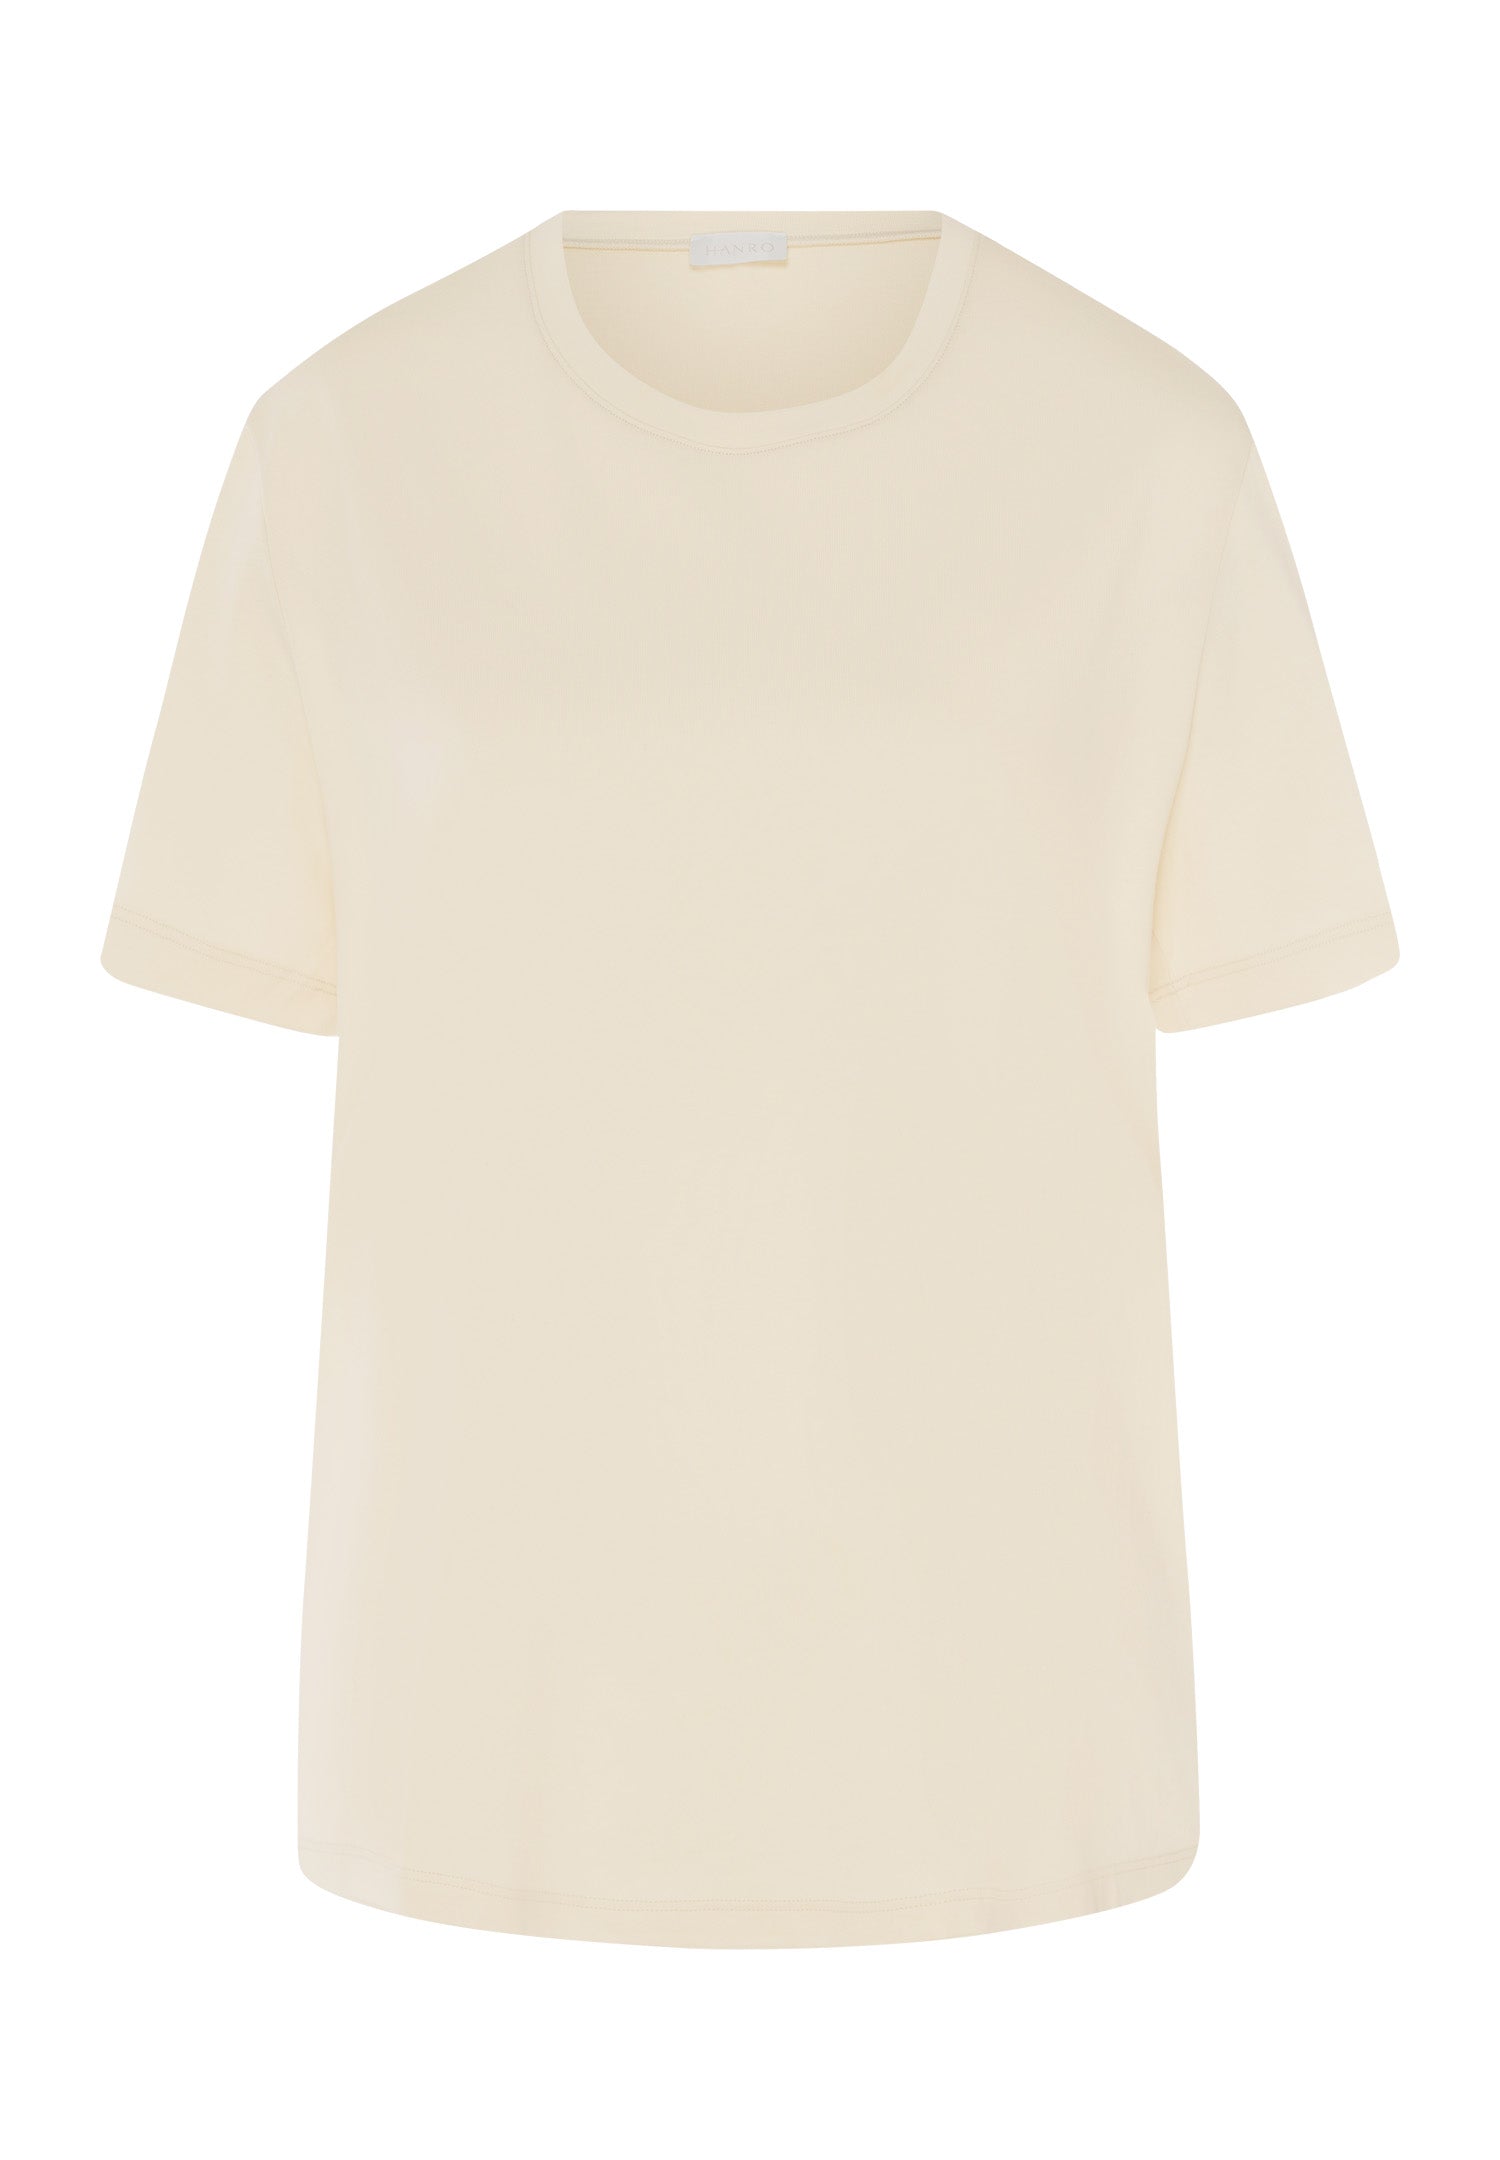 78662 Natural Shirt S/Slv Shirt - 1200 Warm Sand